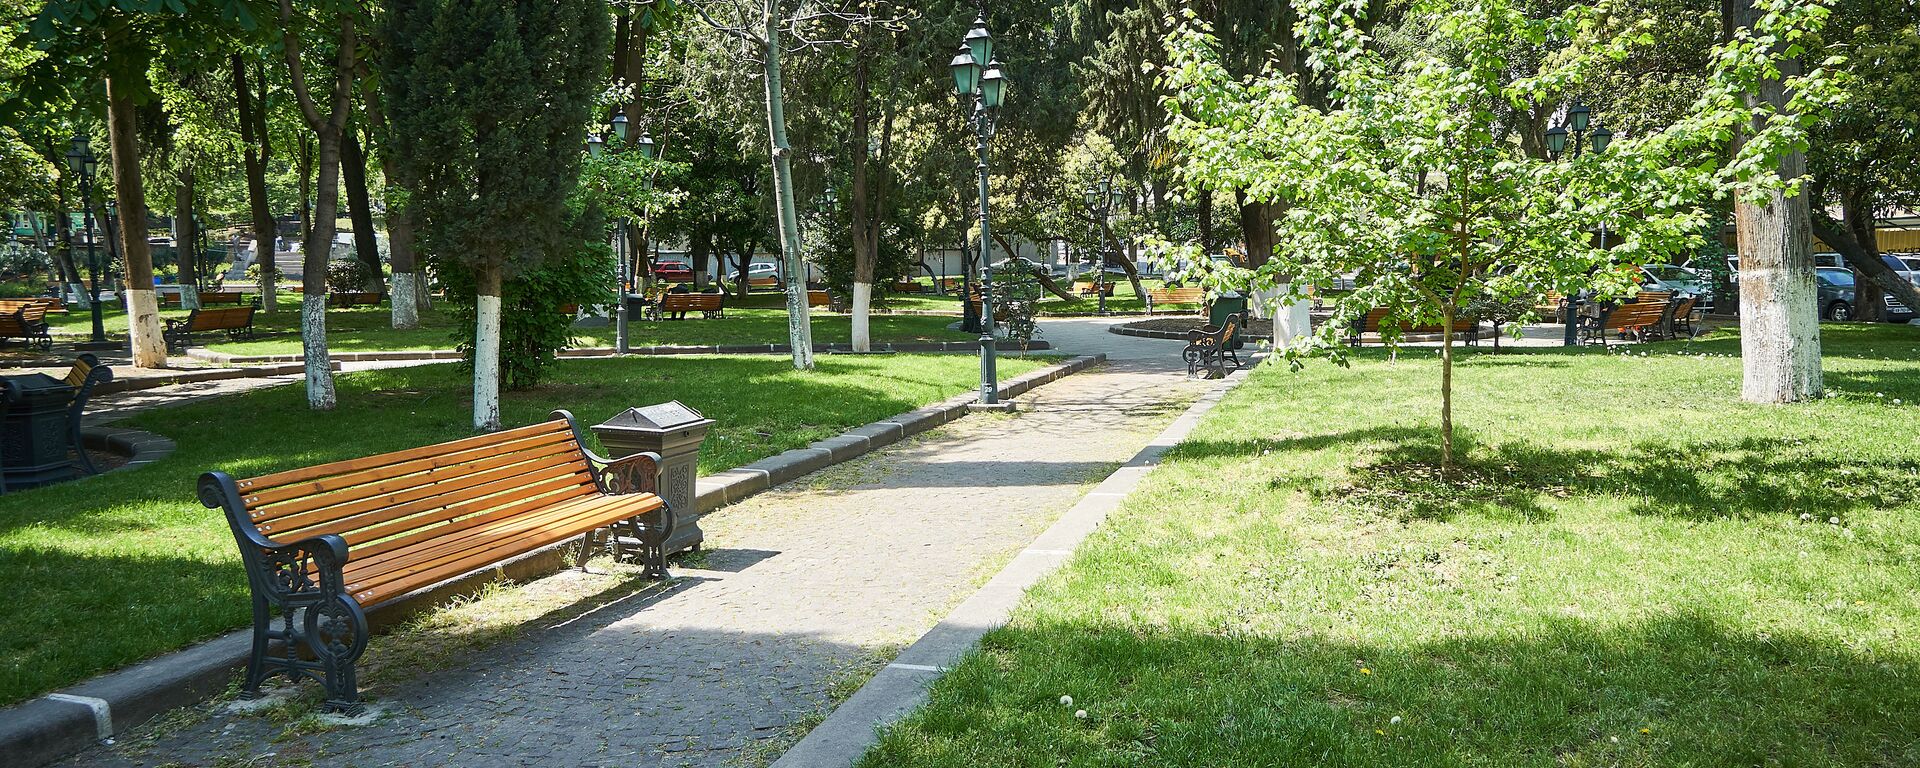 Парк Александровский сад на улице Атонели у резиденции президента Грузии - Sputnik Грузия, 1920, 10.02.2021